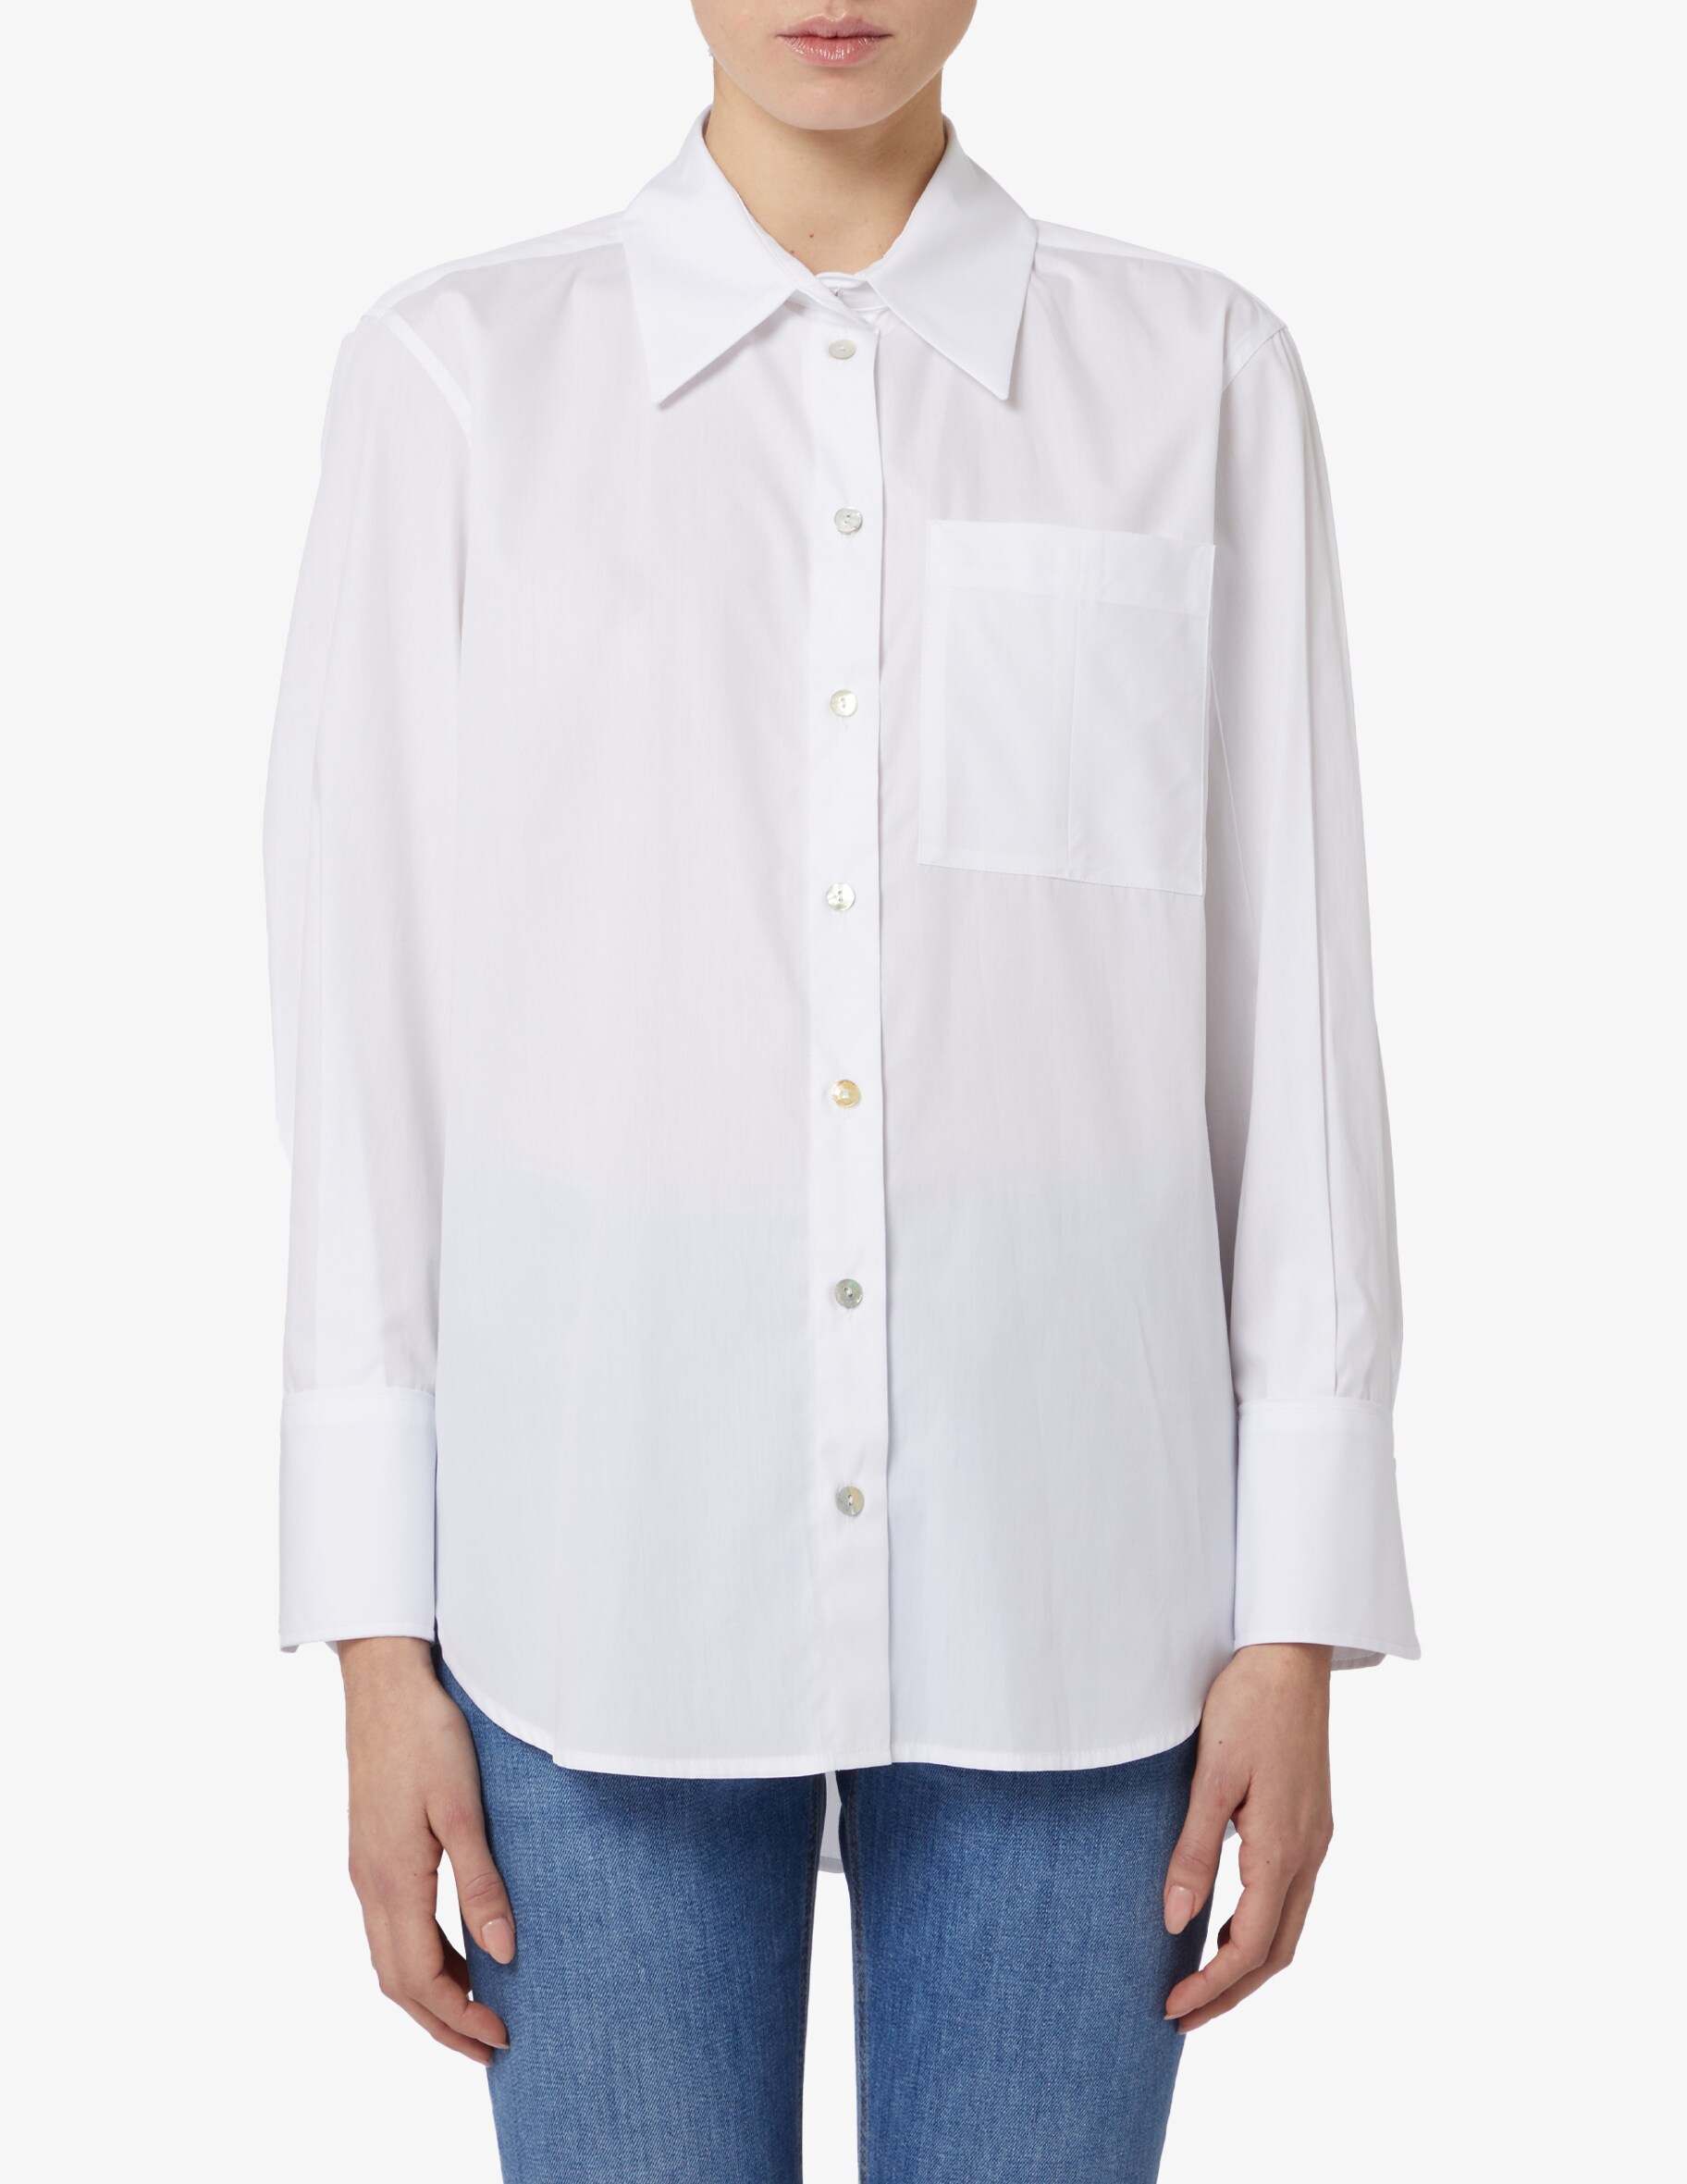 Рубашка оверсайз Nuvola из поплина Marella, белый рубашка оверсайз из поплина zara белый